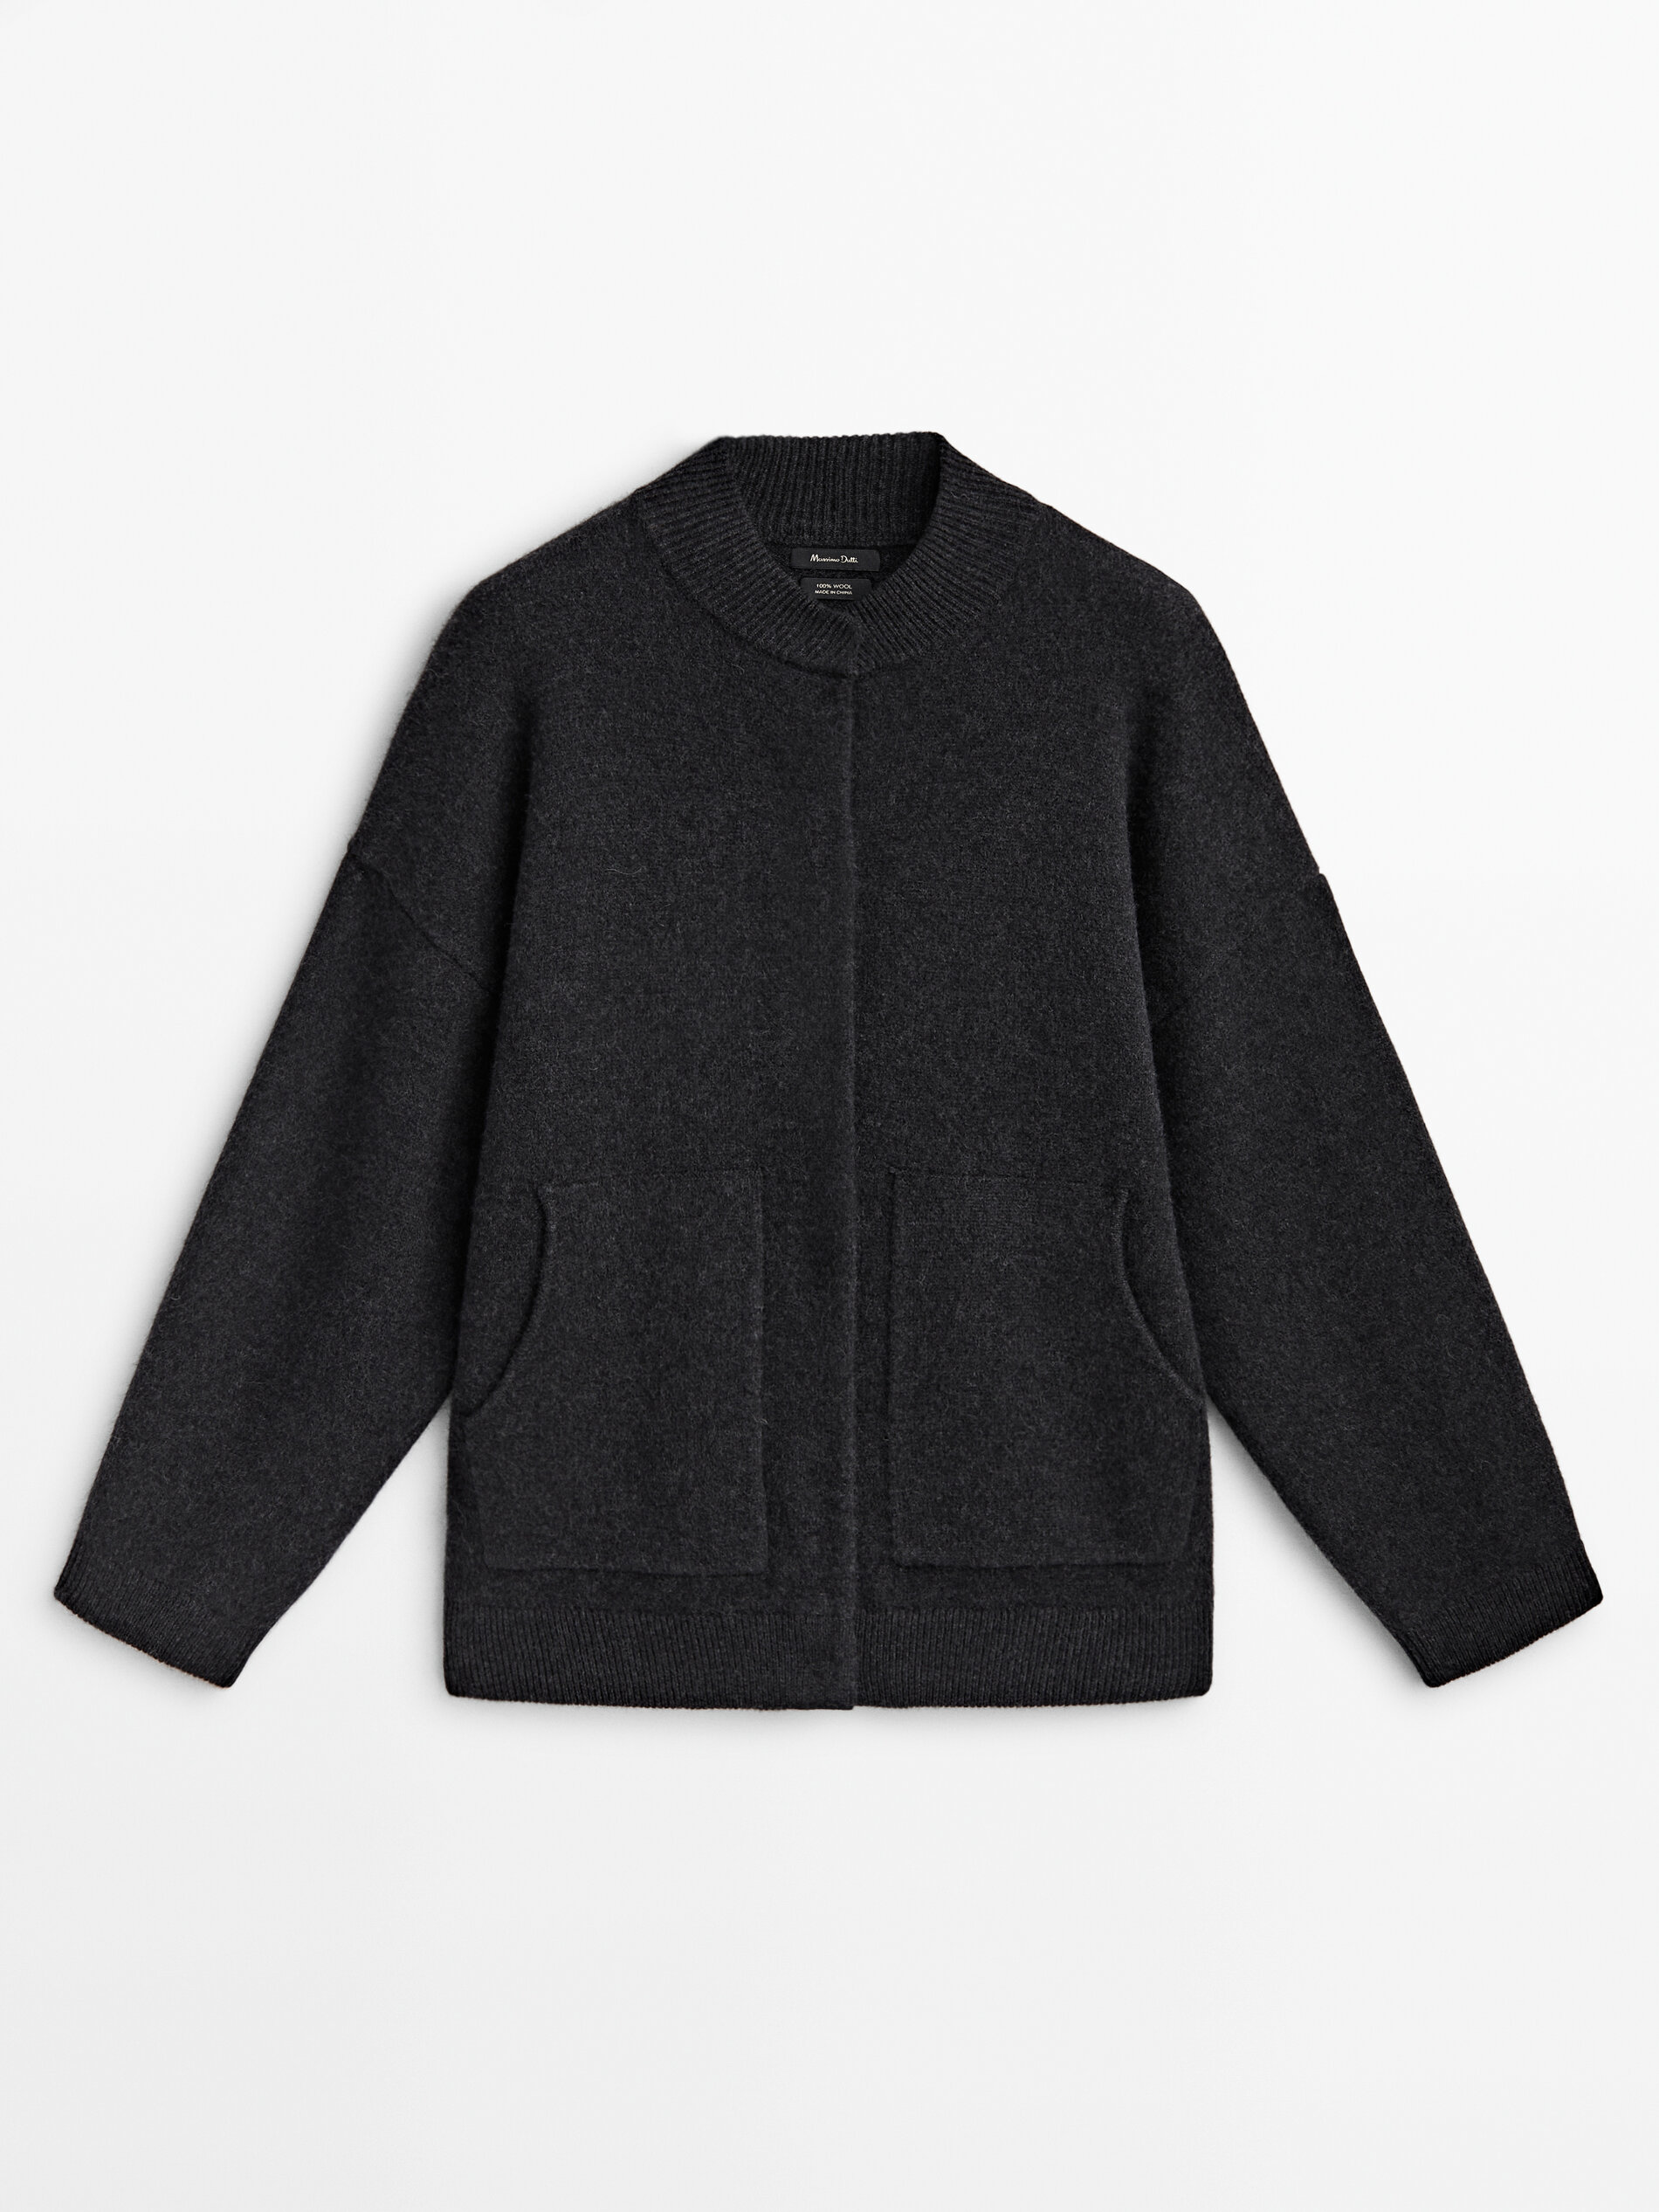 100% wool knit bomber jacket